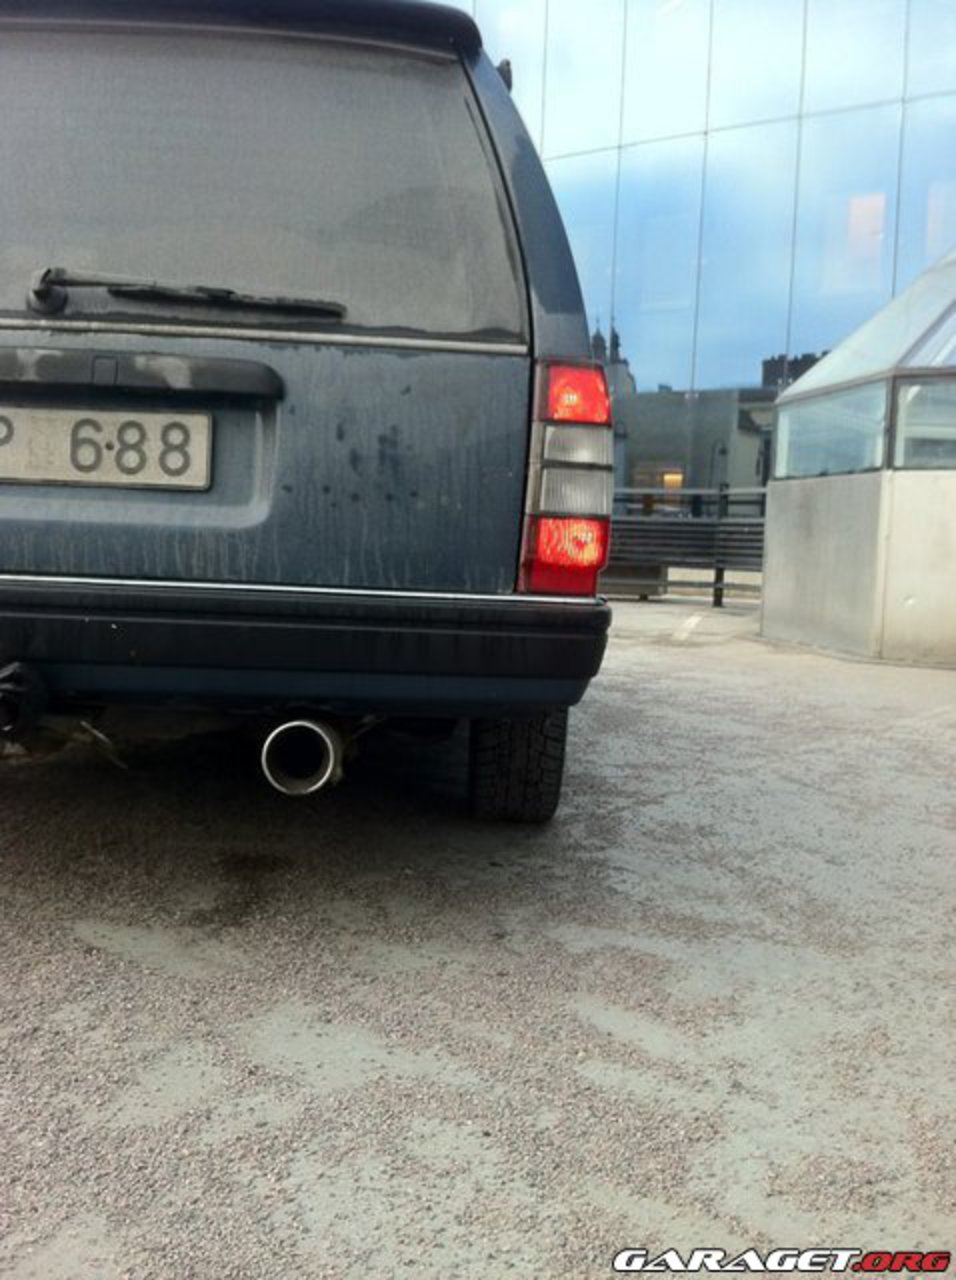 Volvo 765-697 GLE (1988) / Garaget